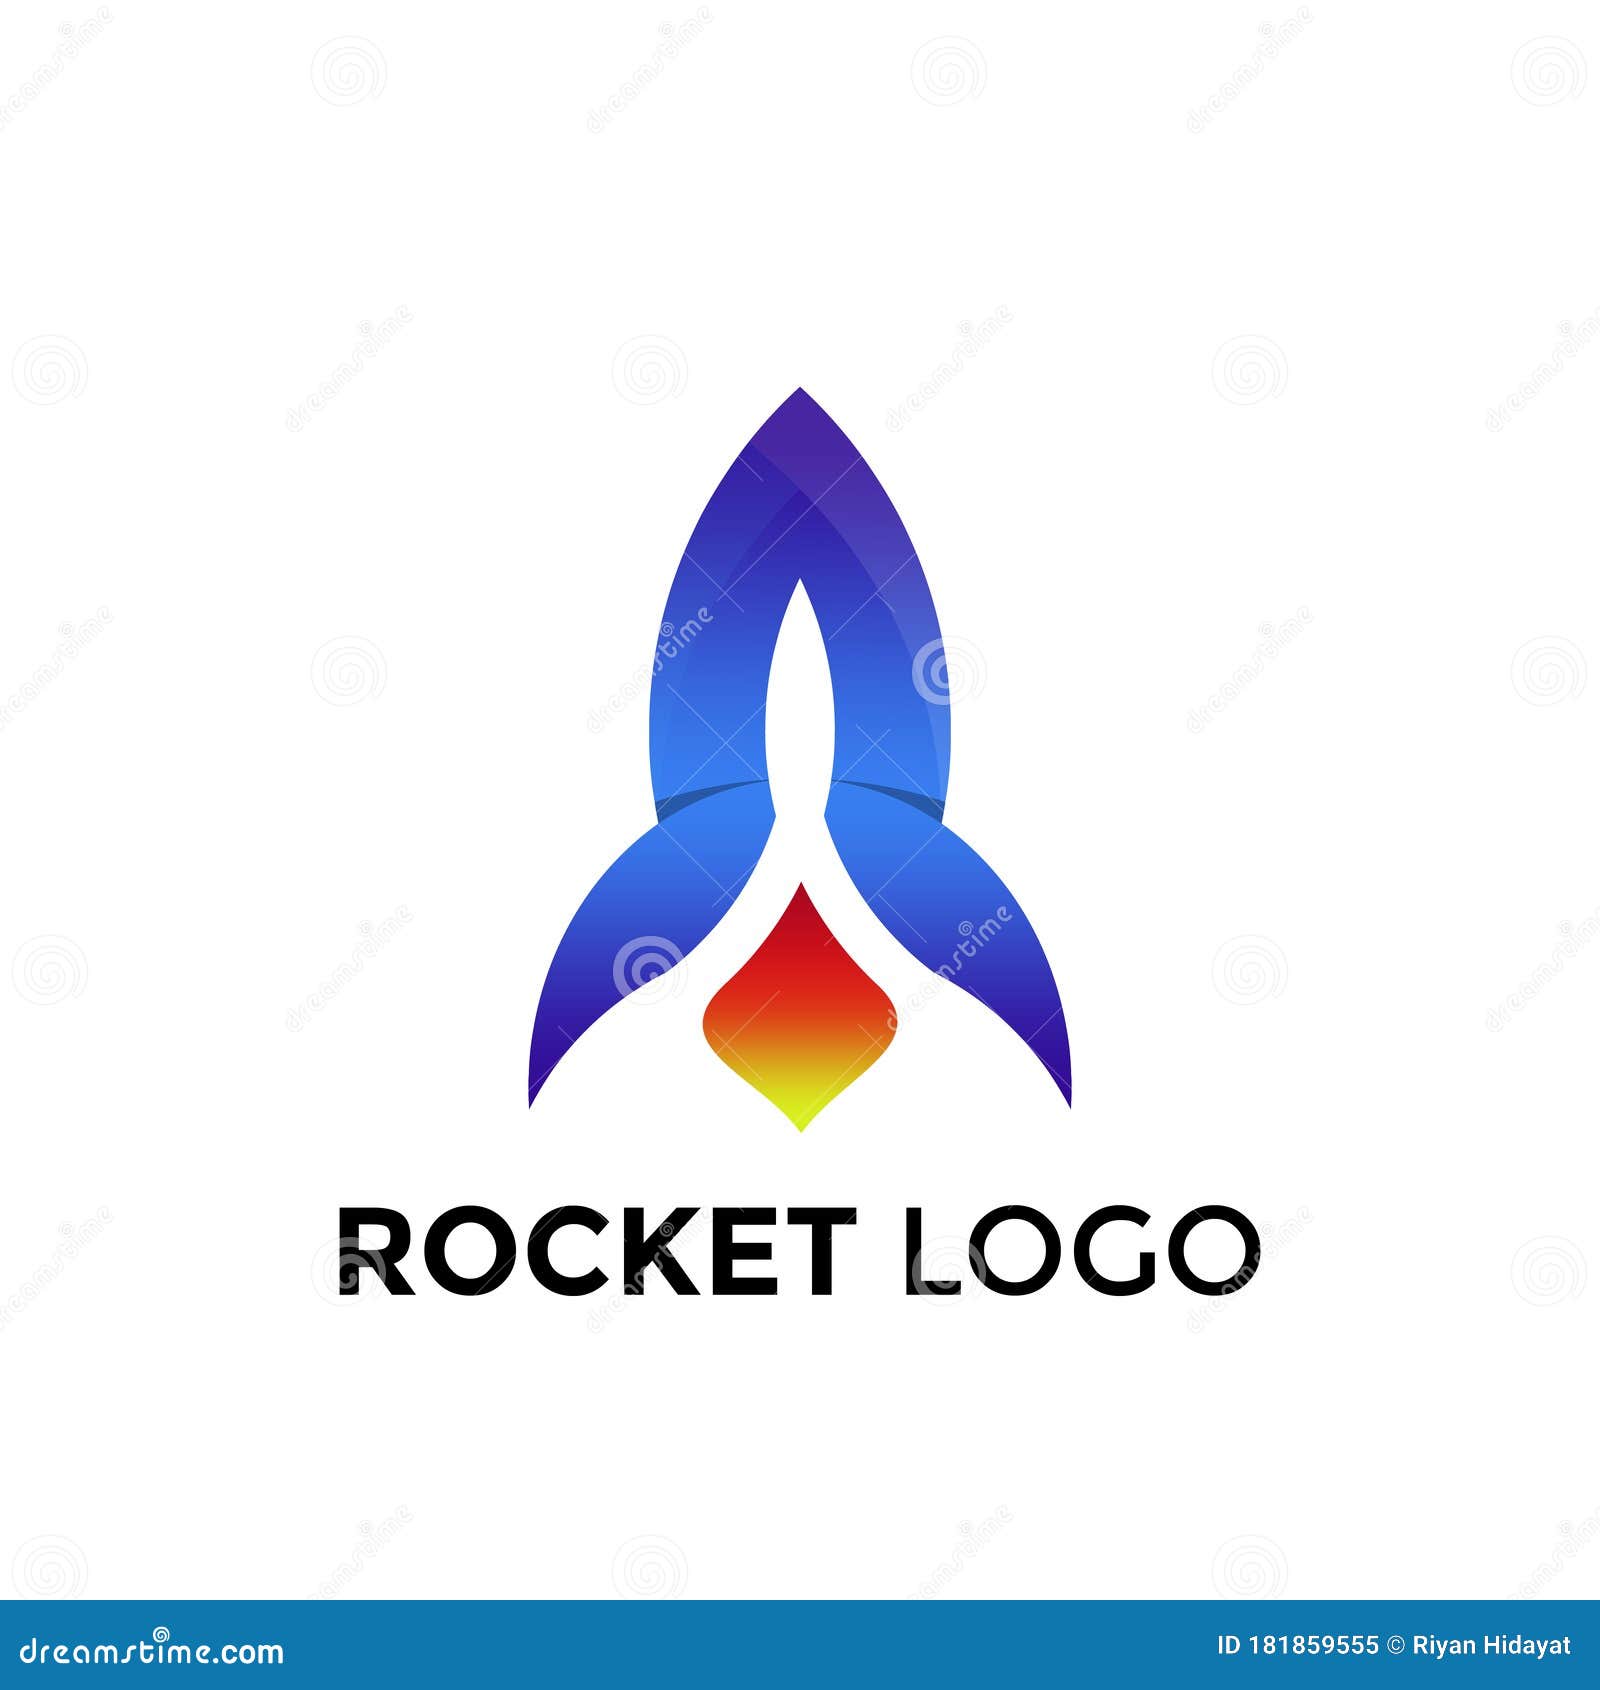 rocket logo ideas 6